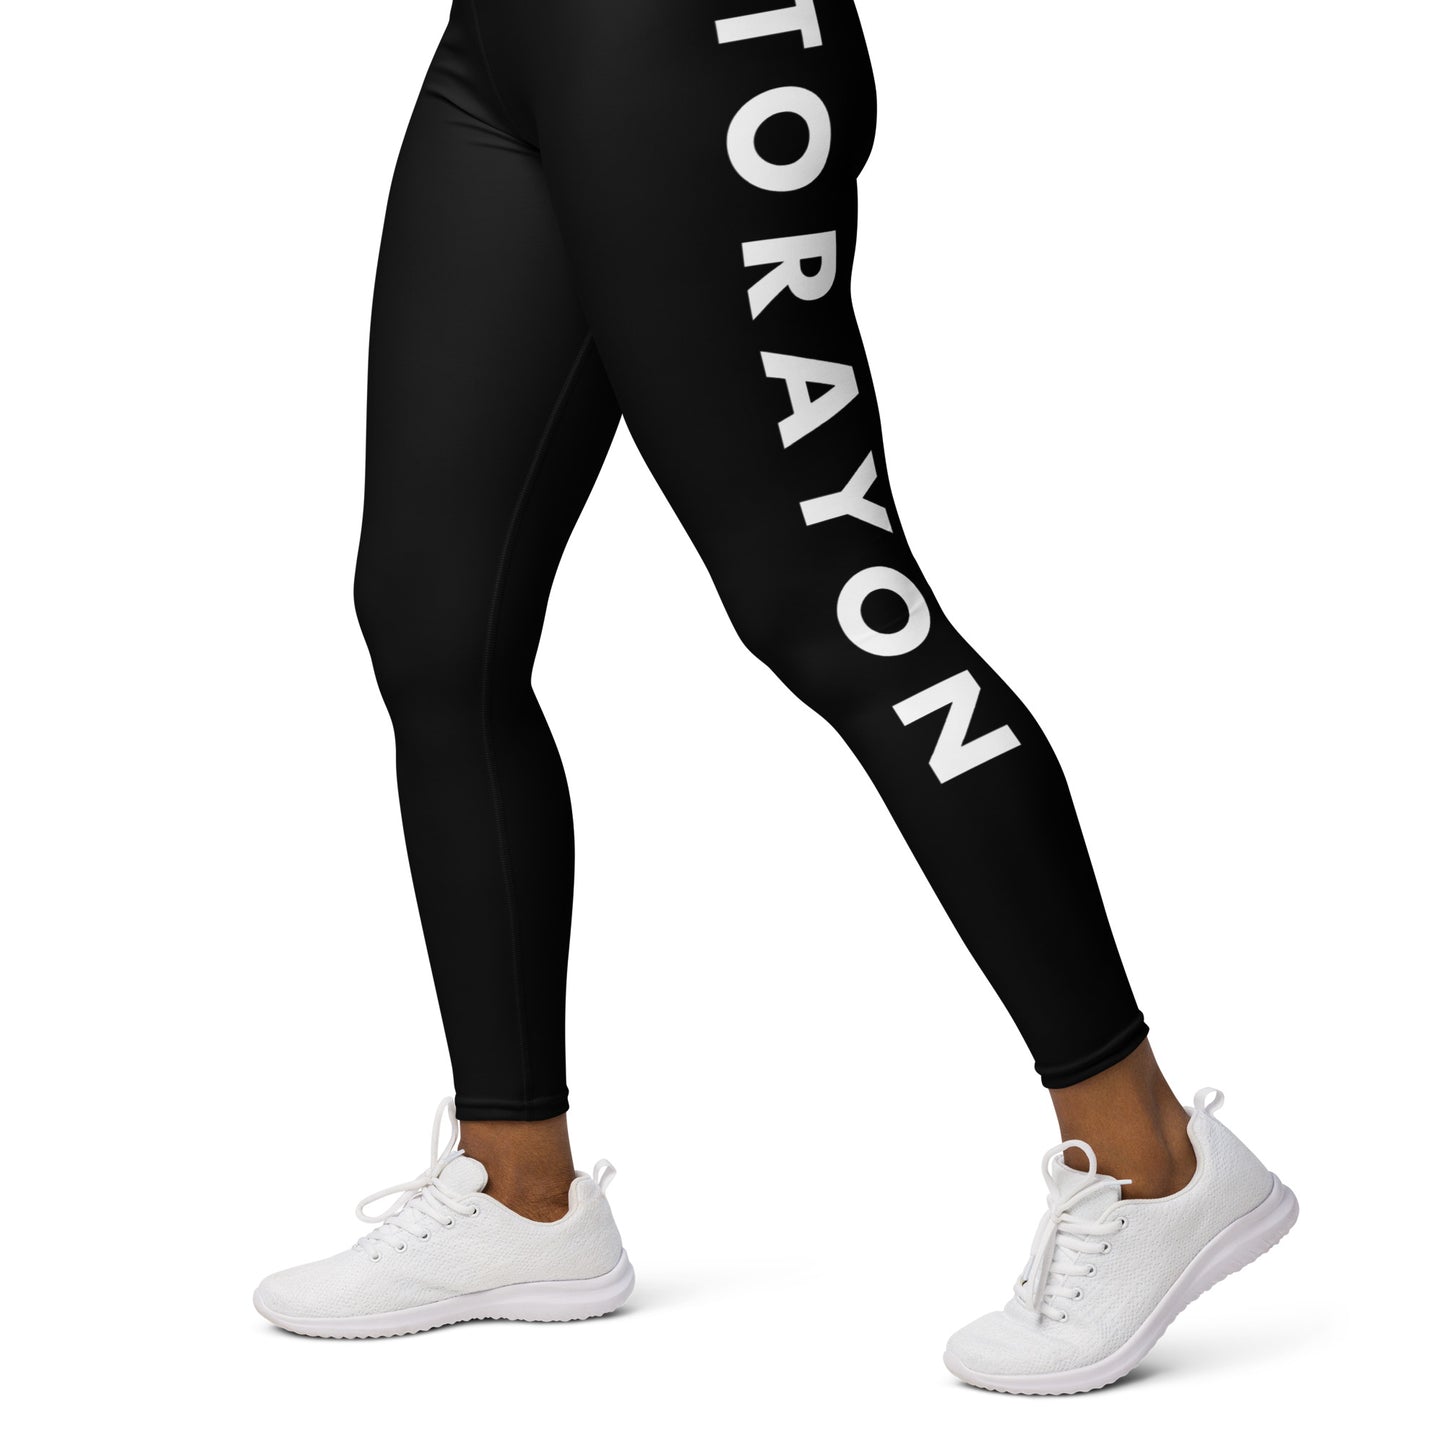 TORAYON Black Yoga Leggings